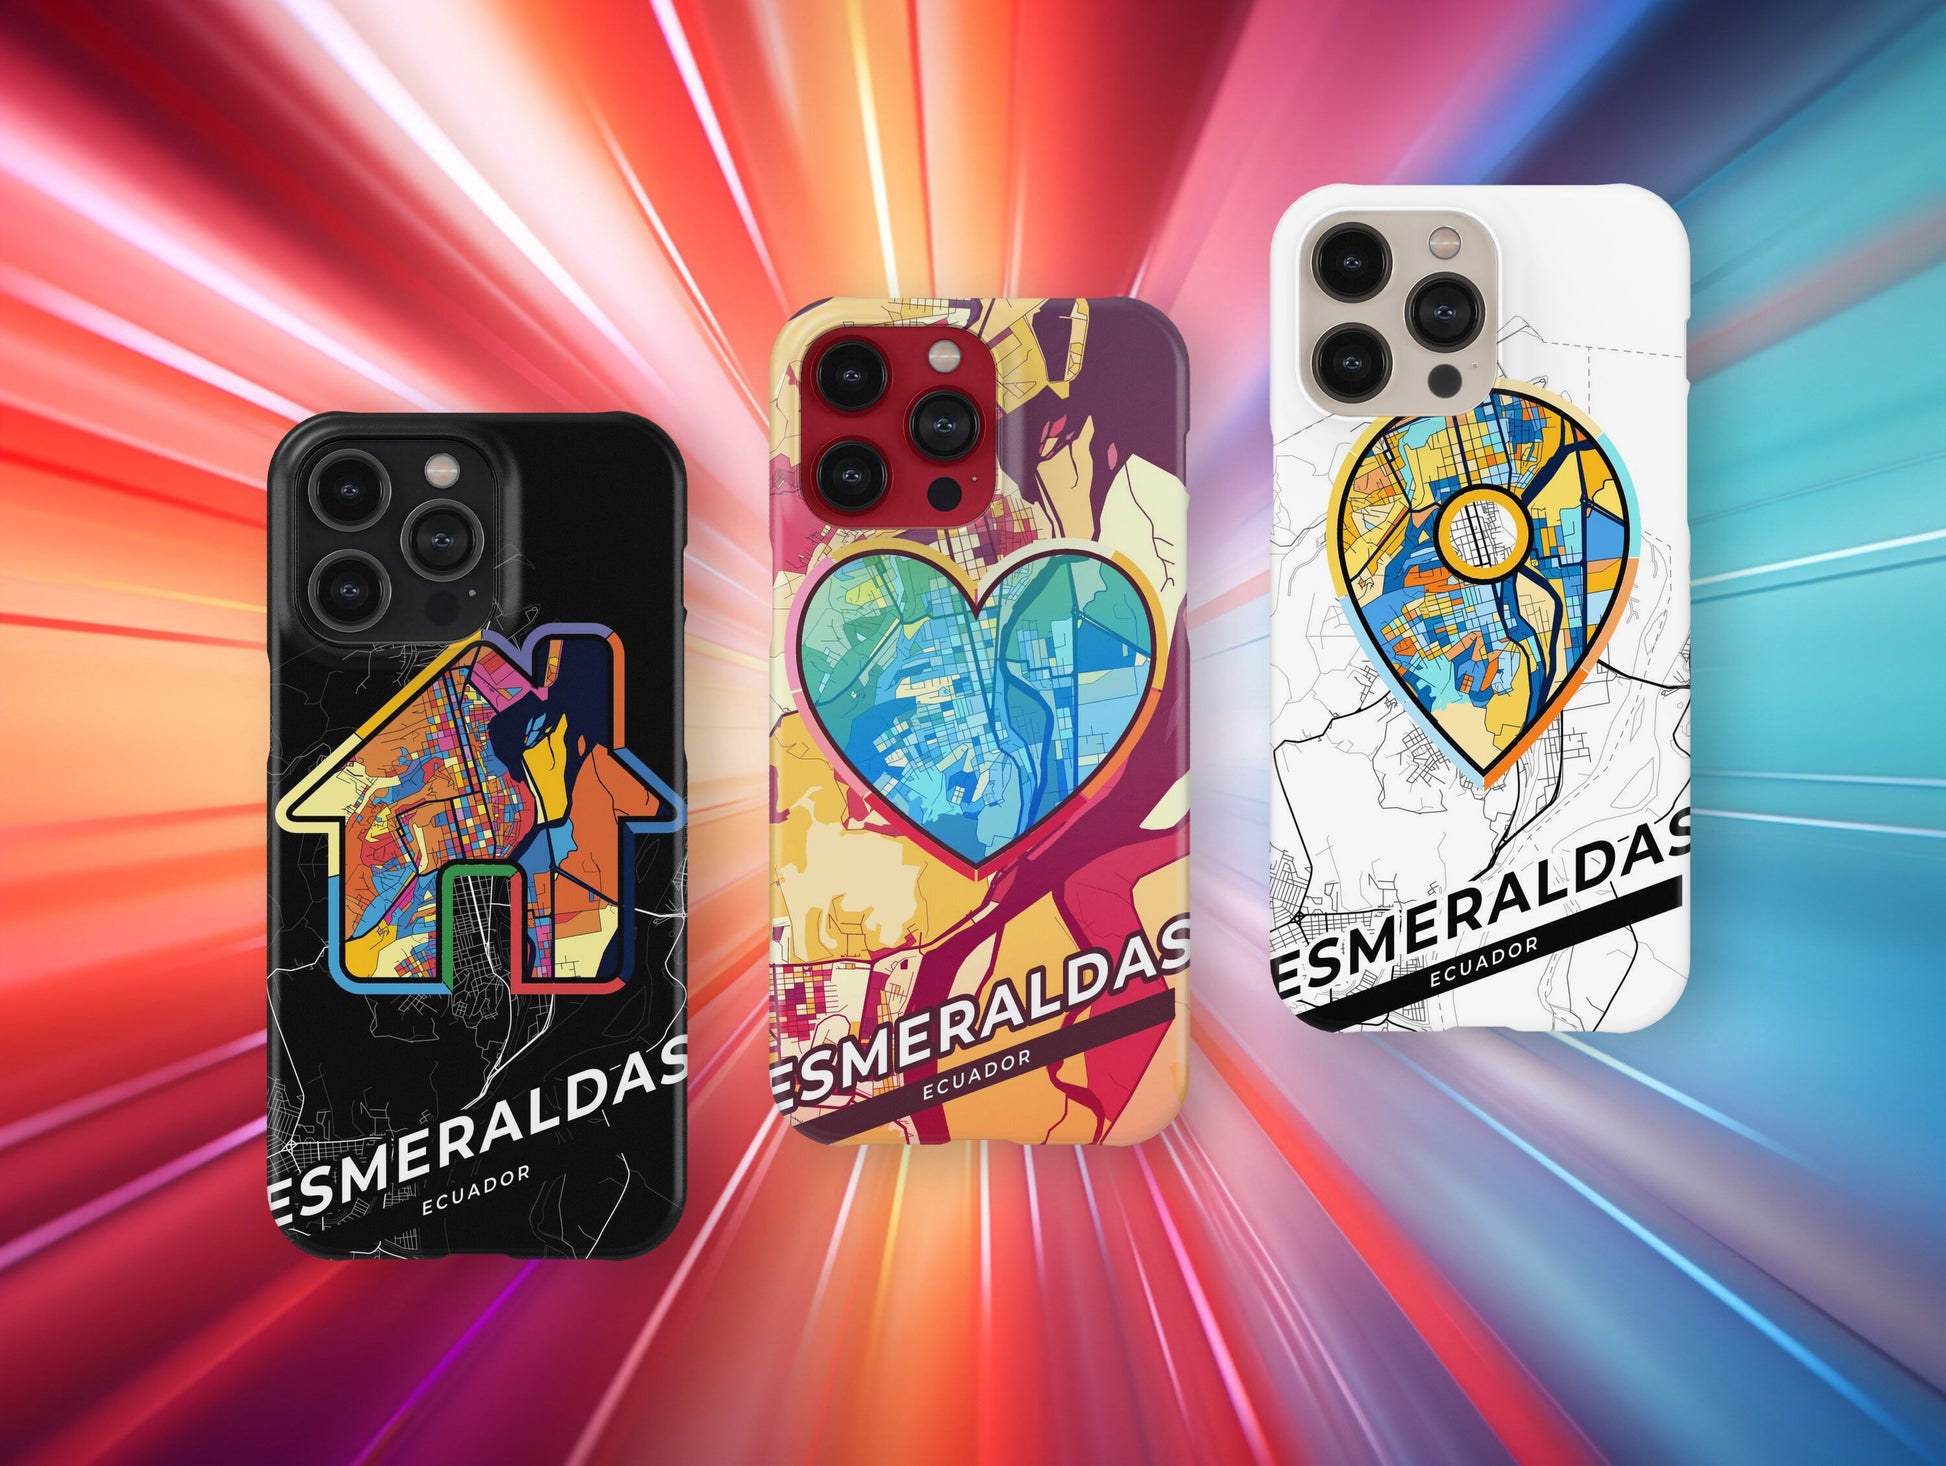 Esmeraldas Ecuador slim phone case with colorful icon. Birthday, wedding or housewarming gift. Couple match cases.